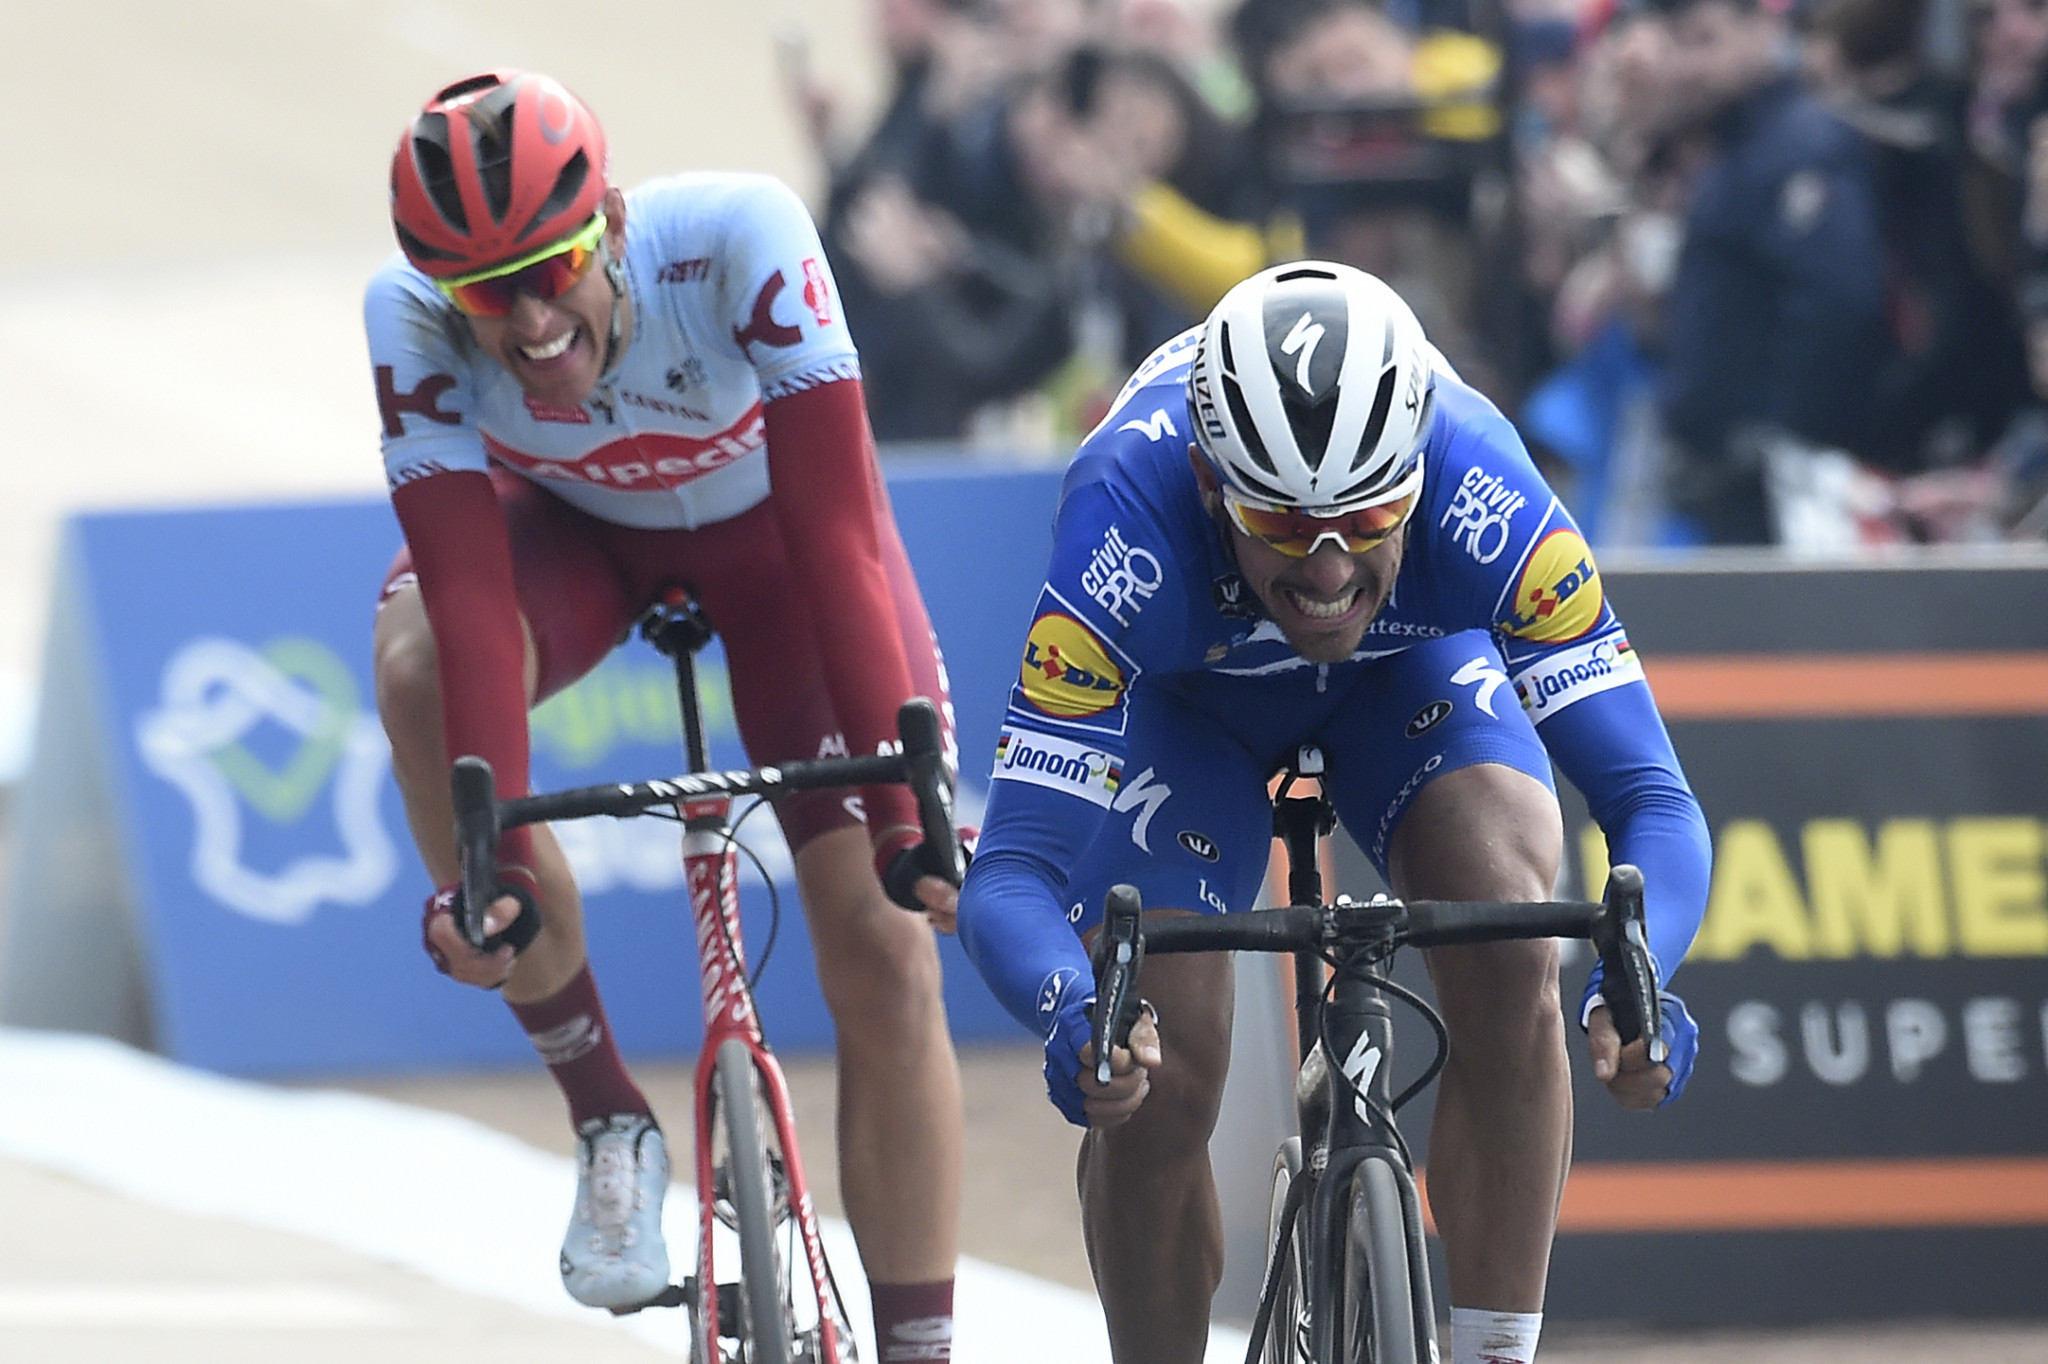 Gilbert out sprints Politt to win Paris-Roubaix for first time